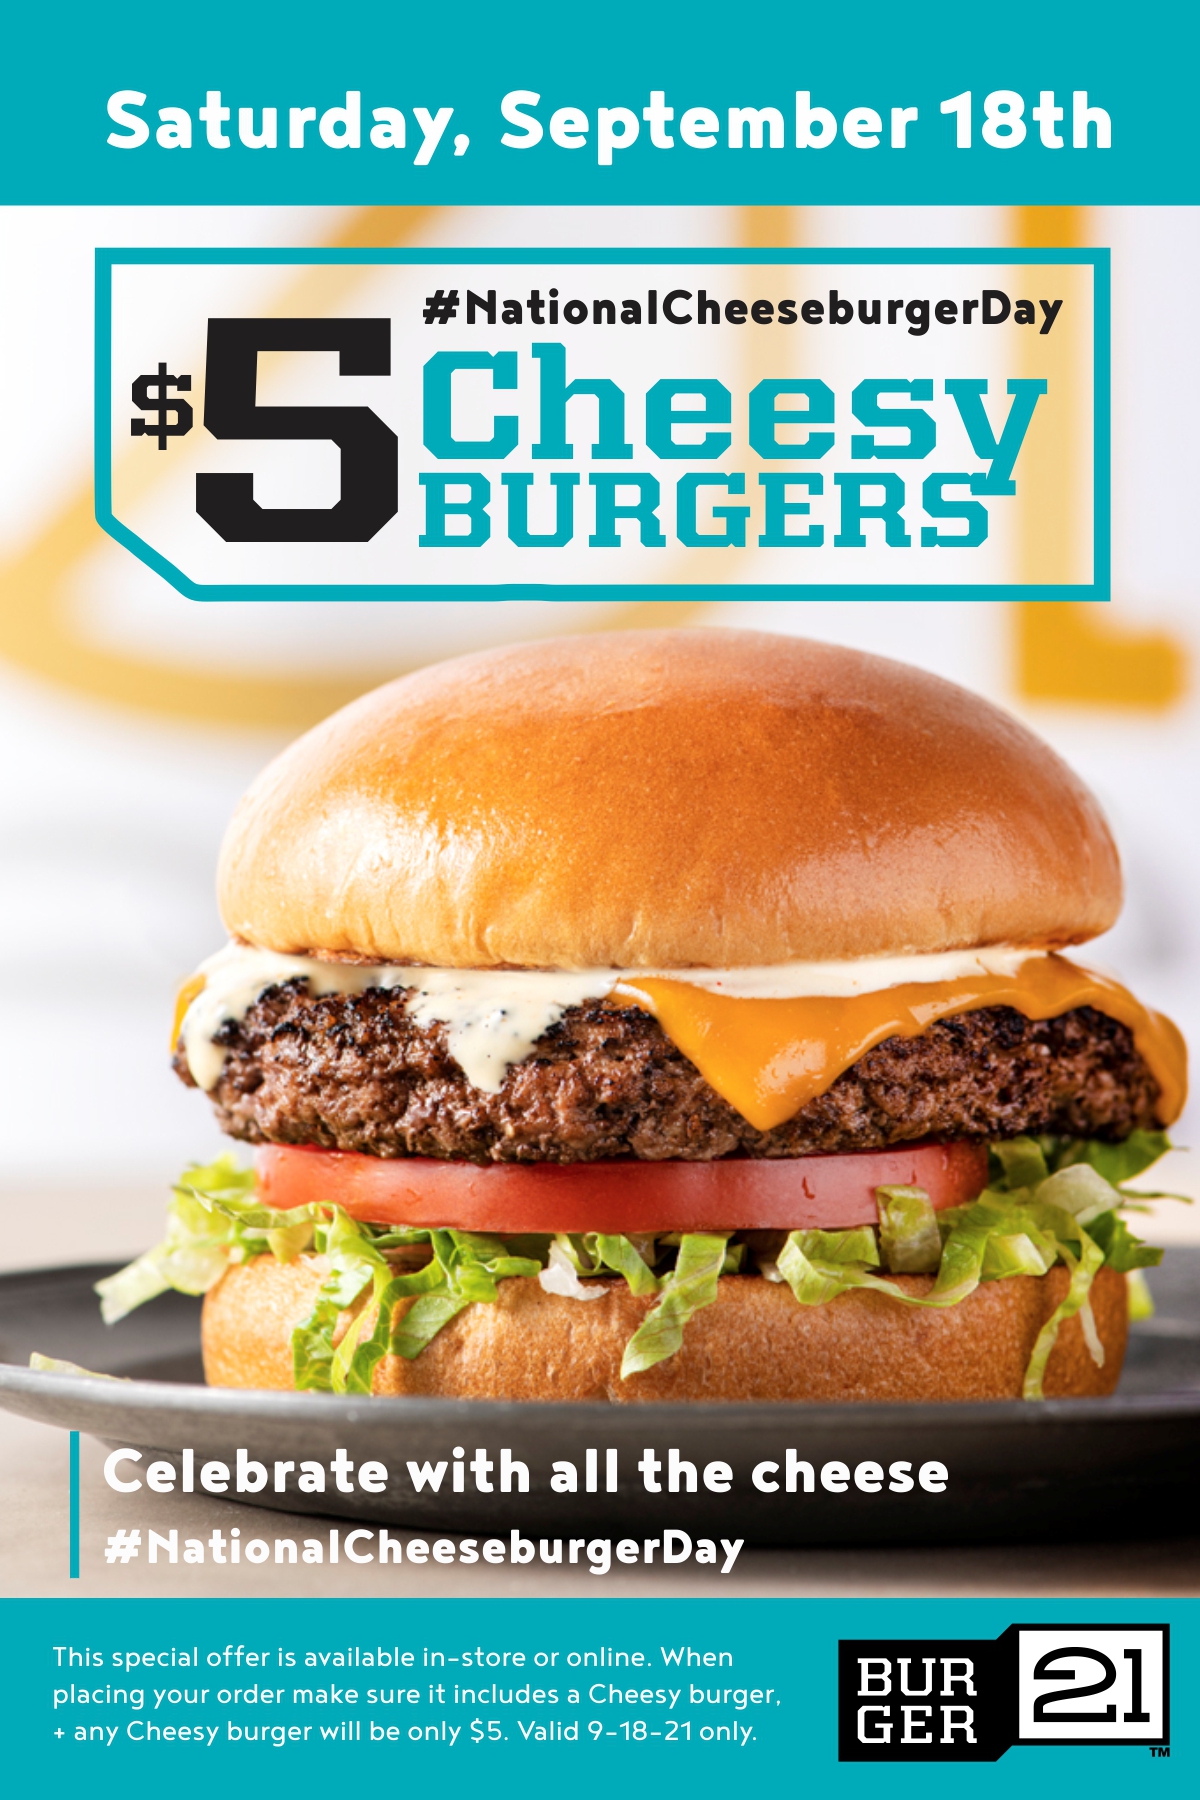 National Cheeseburger Day is September 18th! Burger 21 Burgers